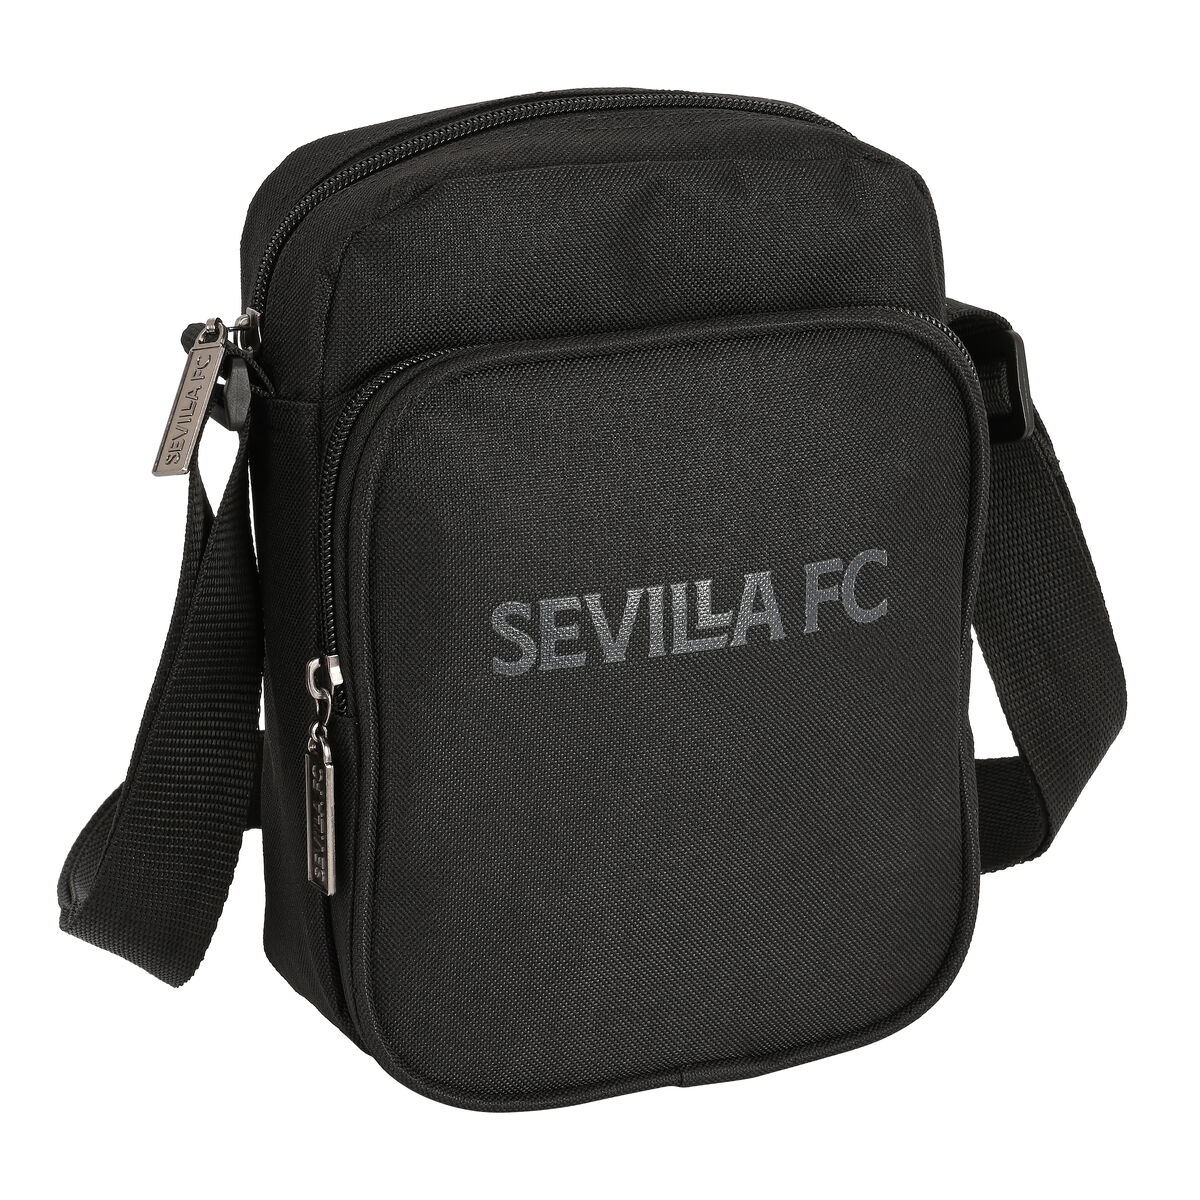 Geantă Bandulieră Sevilla Fútbol Club Teen Negru (16 x 22 x 6 cm)